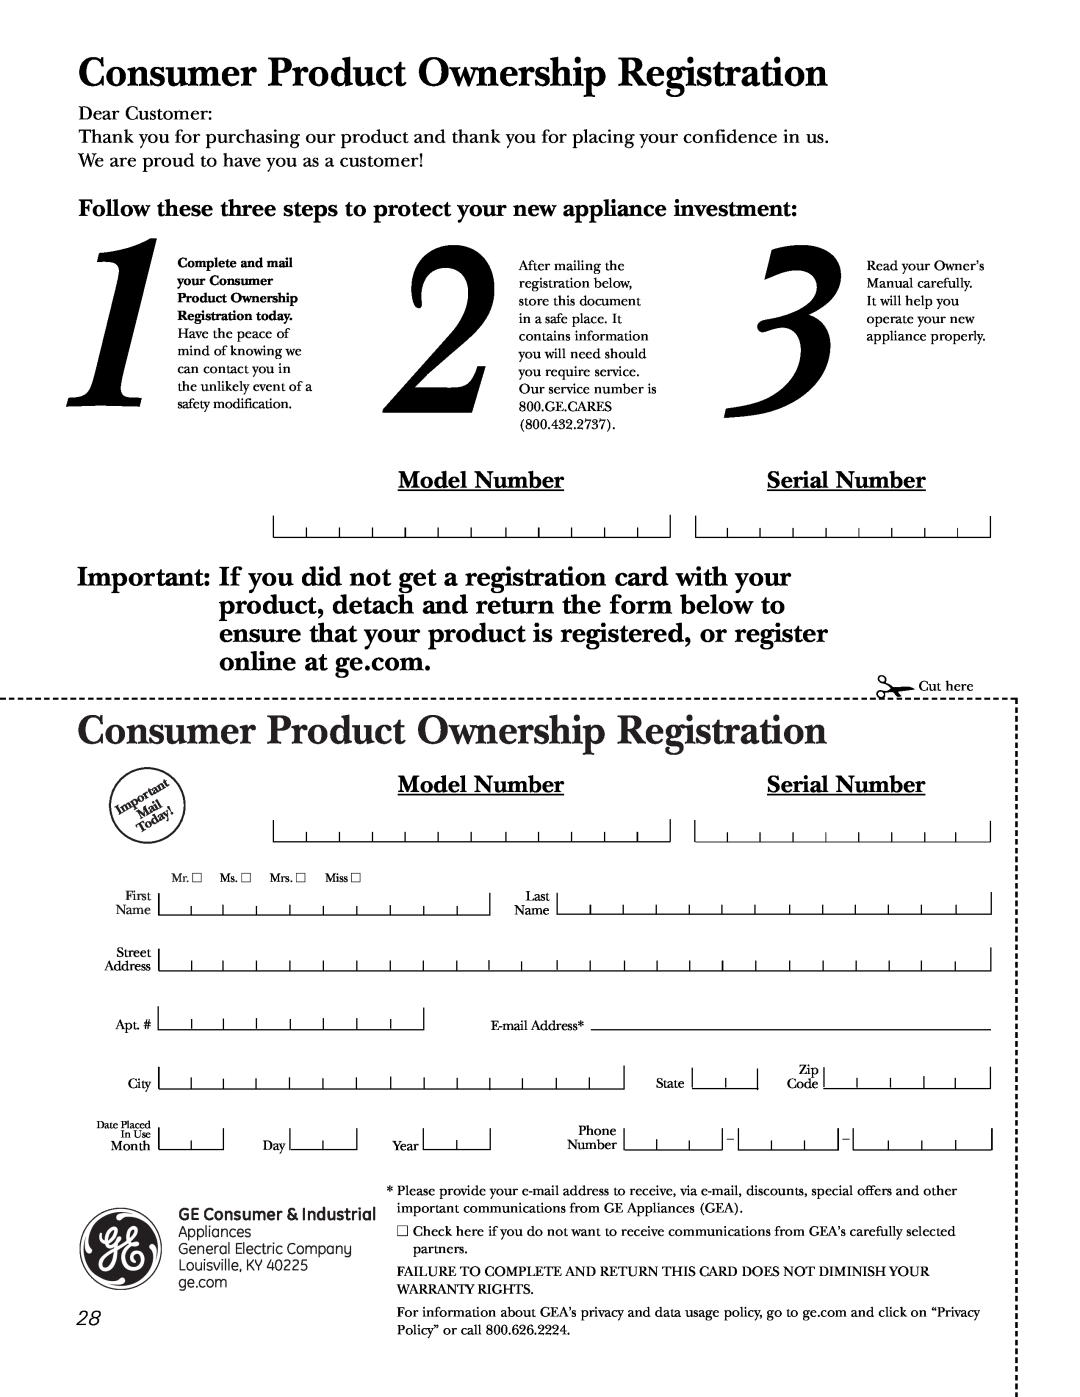 GE JGP319 Model Number, Serial Number, Consumer Product Ownership Registration, GE Consumer & Industrial, Appliances 